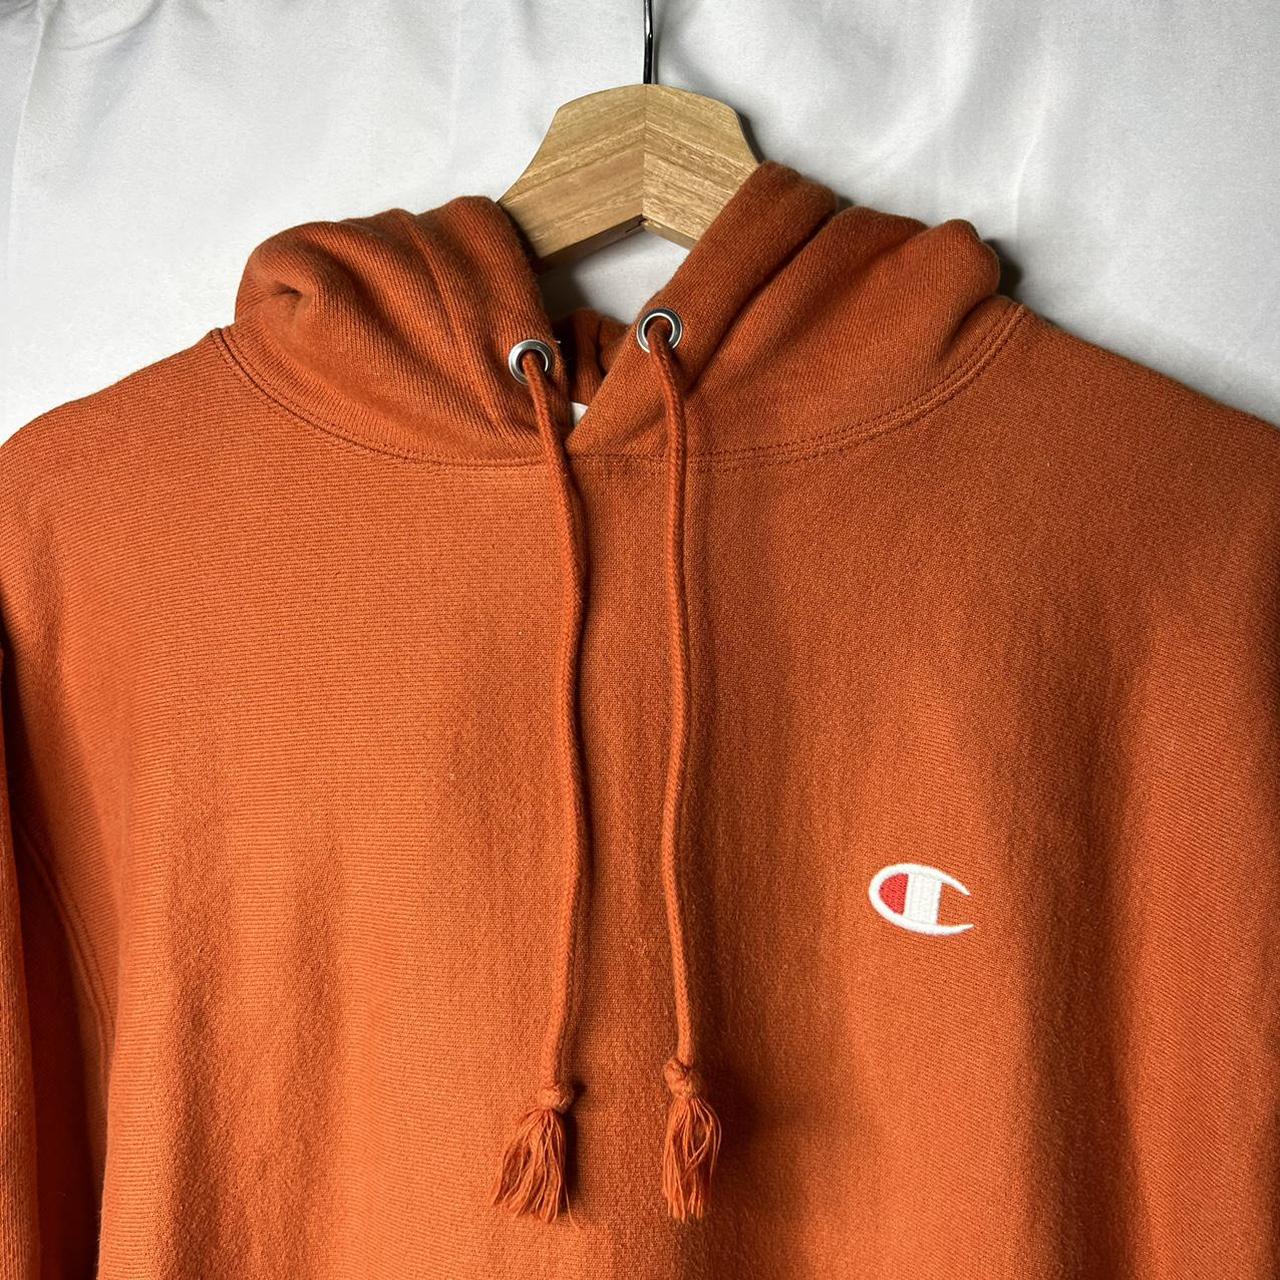 Product Image 2 - Orange Champion Reverse Weave Hoodie

Size